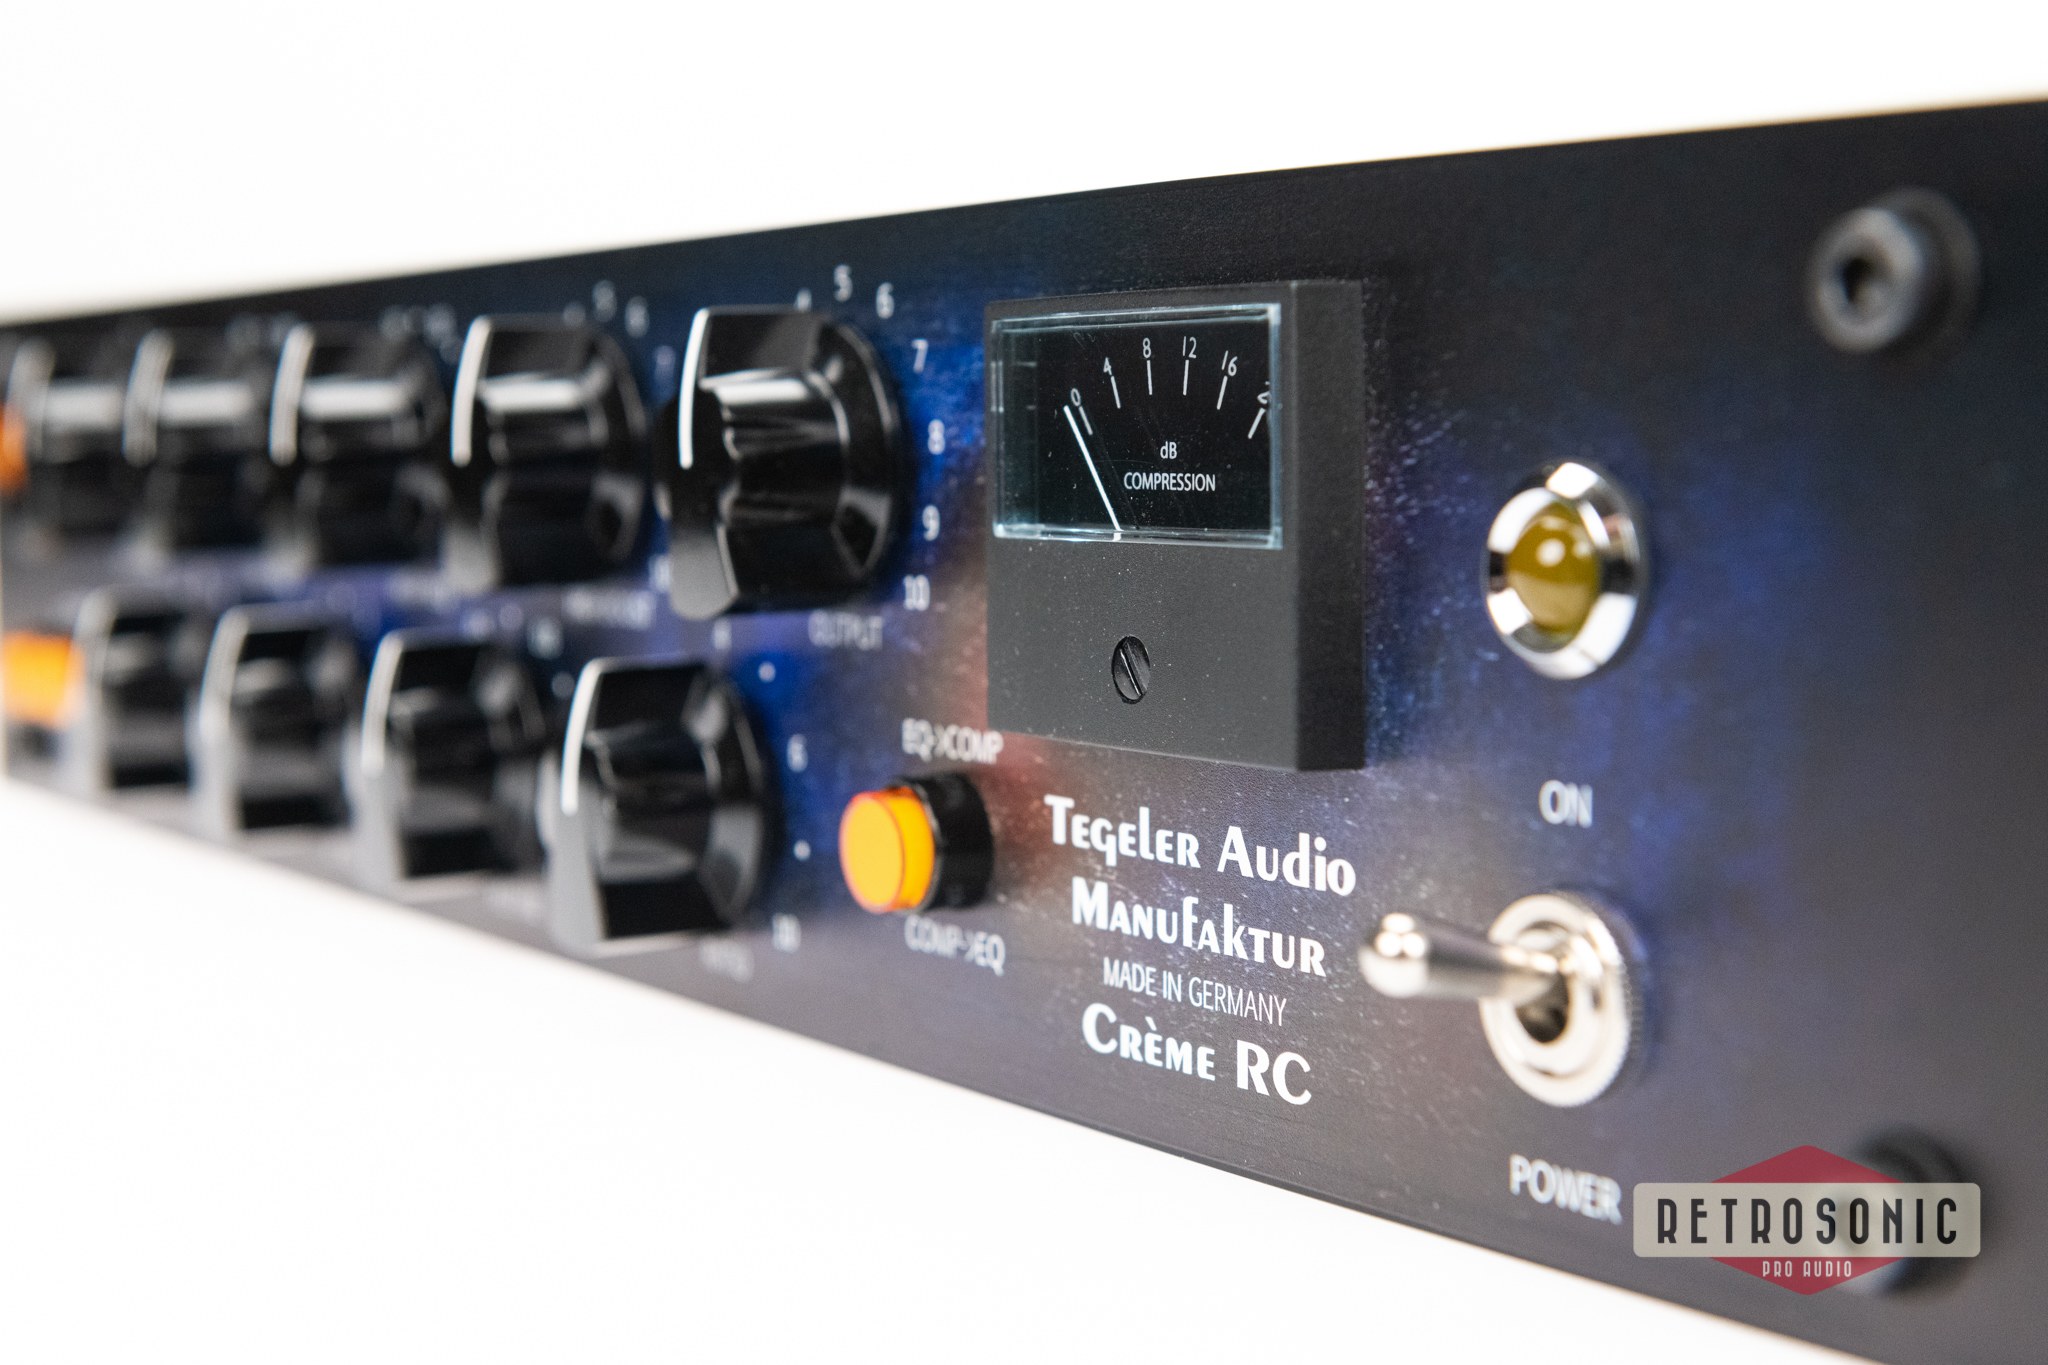 Tegeler Audio Creme RC Bus Compressor and Mastering Equalizer